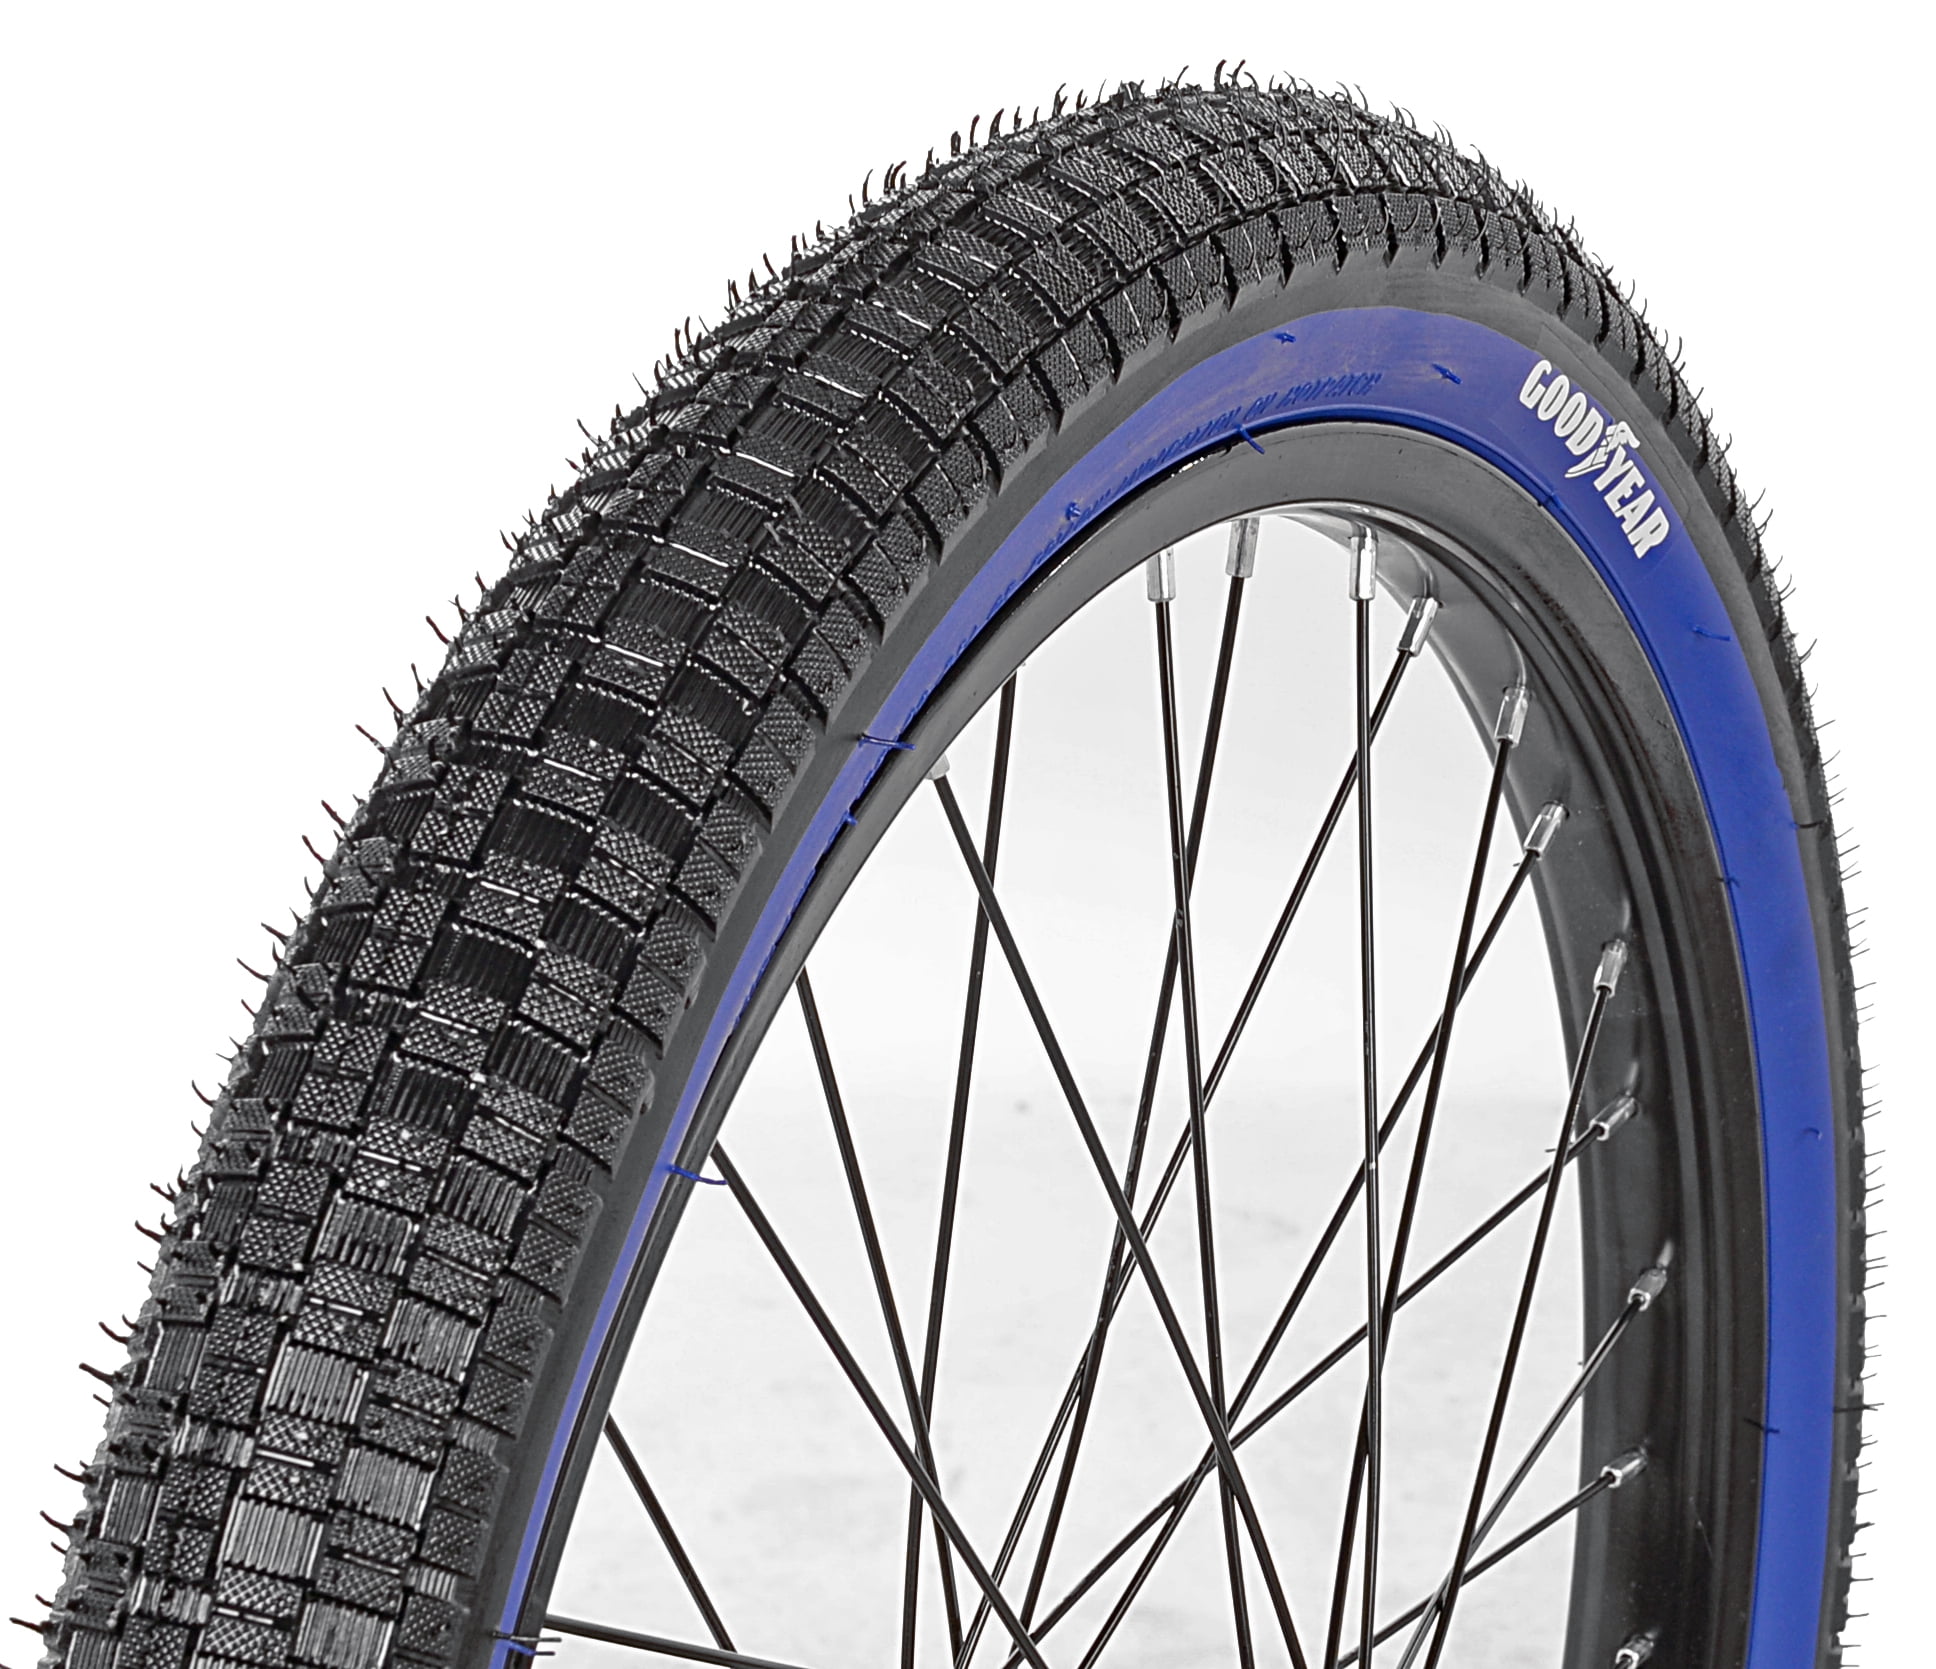 blue bmx tires 20